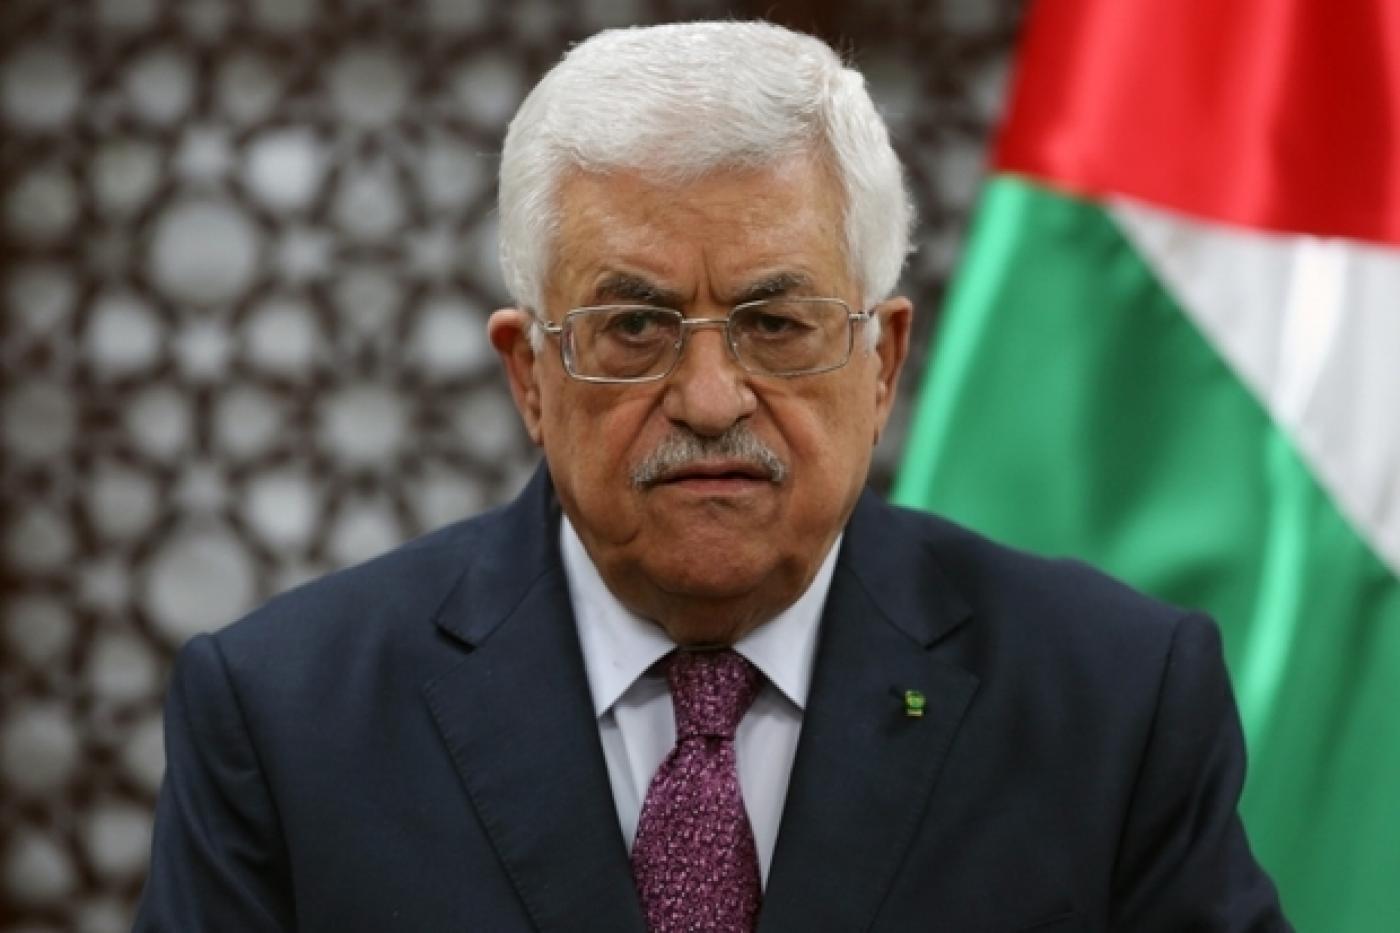 Abbas ends agreement